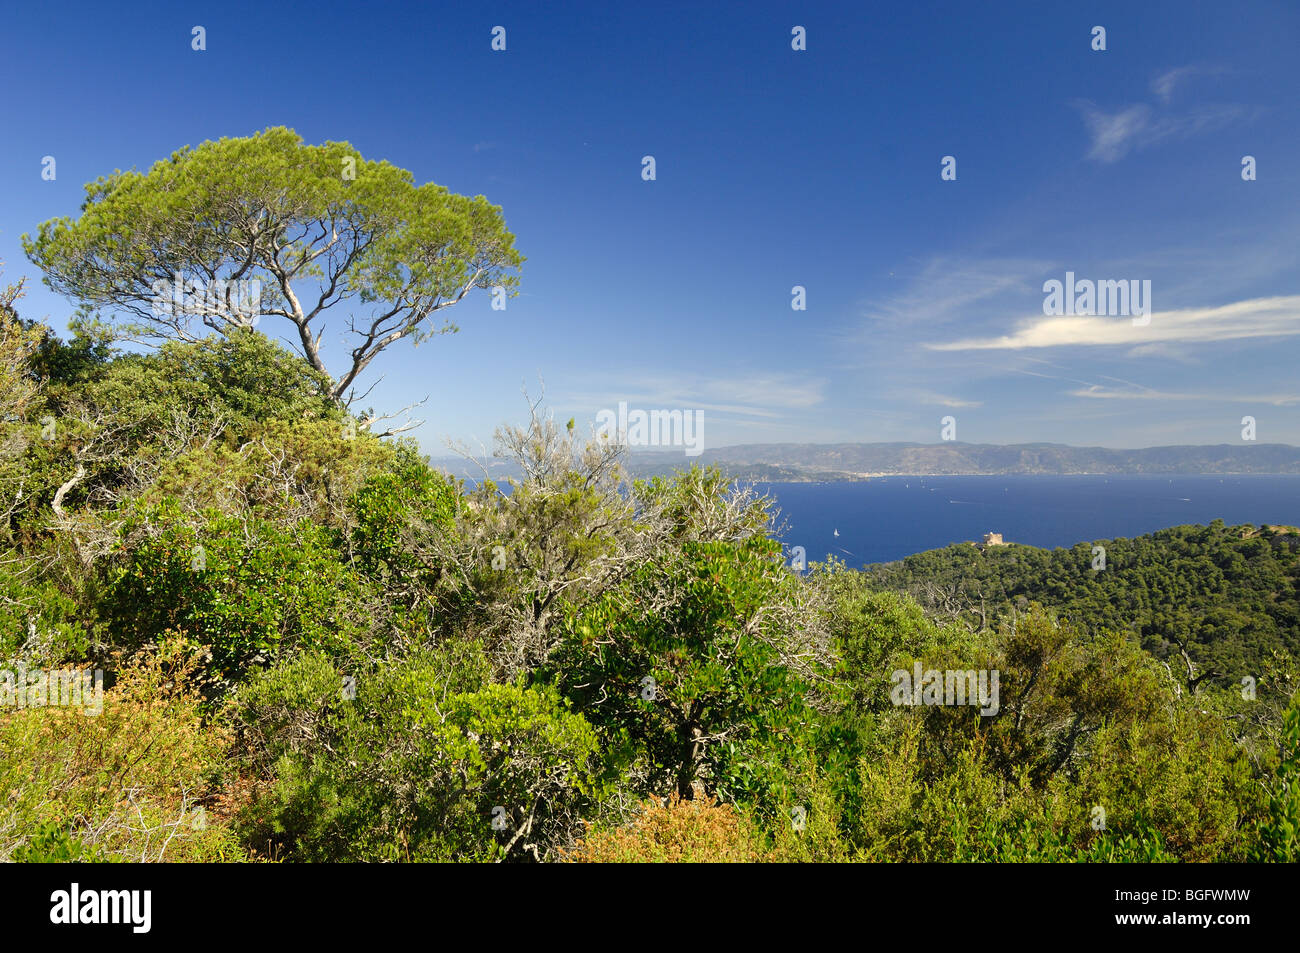 Port-Cros National Park, View from Mont Vinaigre, Port Cros Island, Îles d'Hyères, Var, Côte d'Azur or French Riviera, France Stock Photo